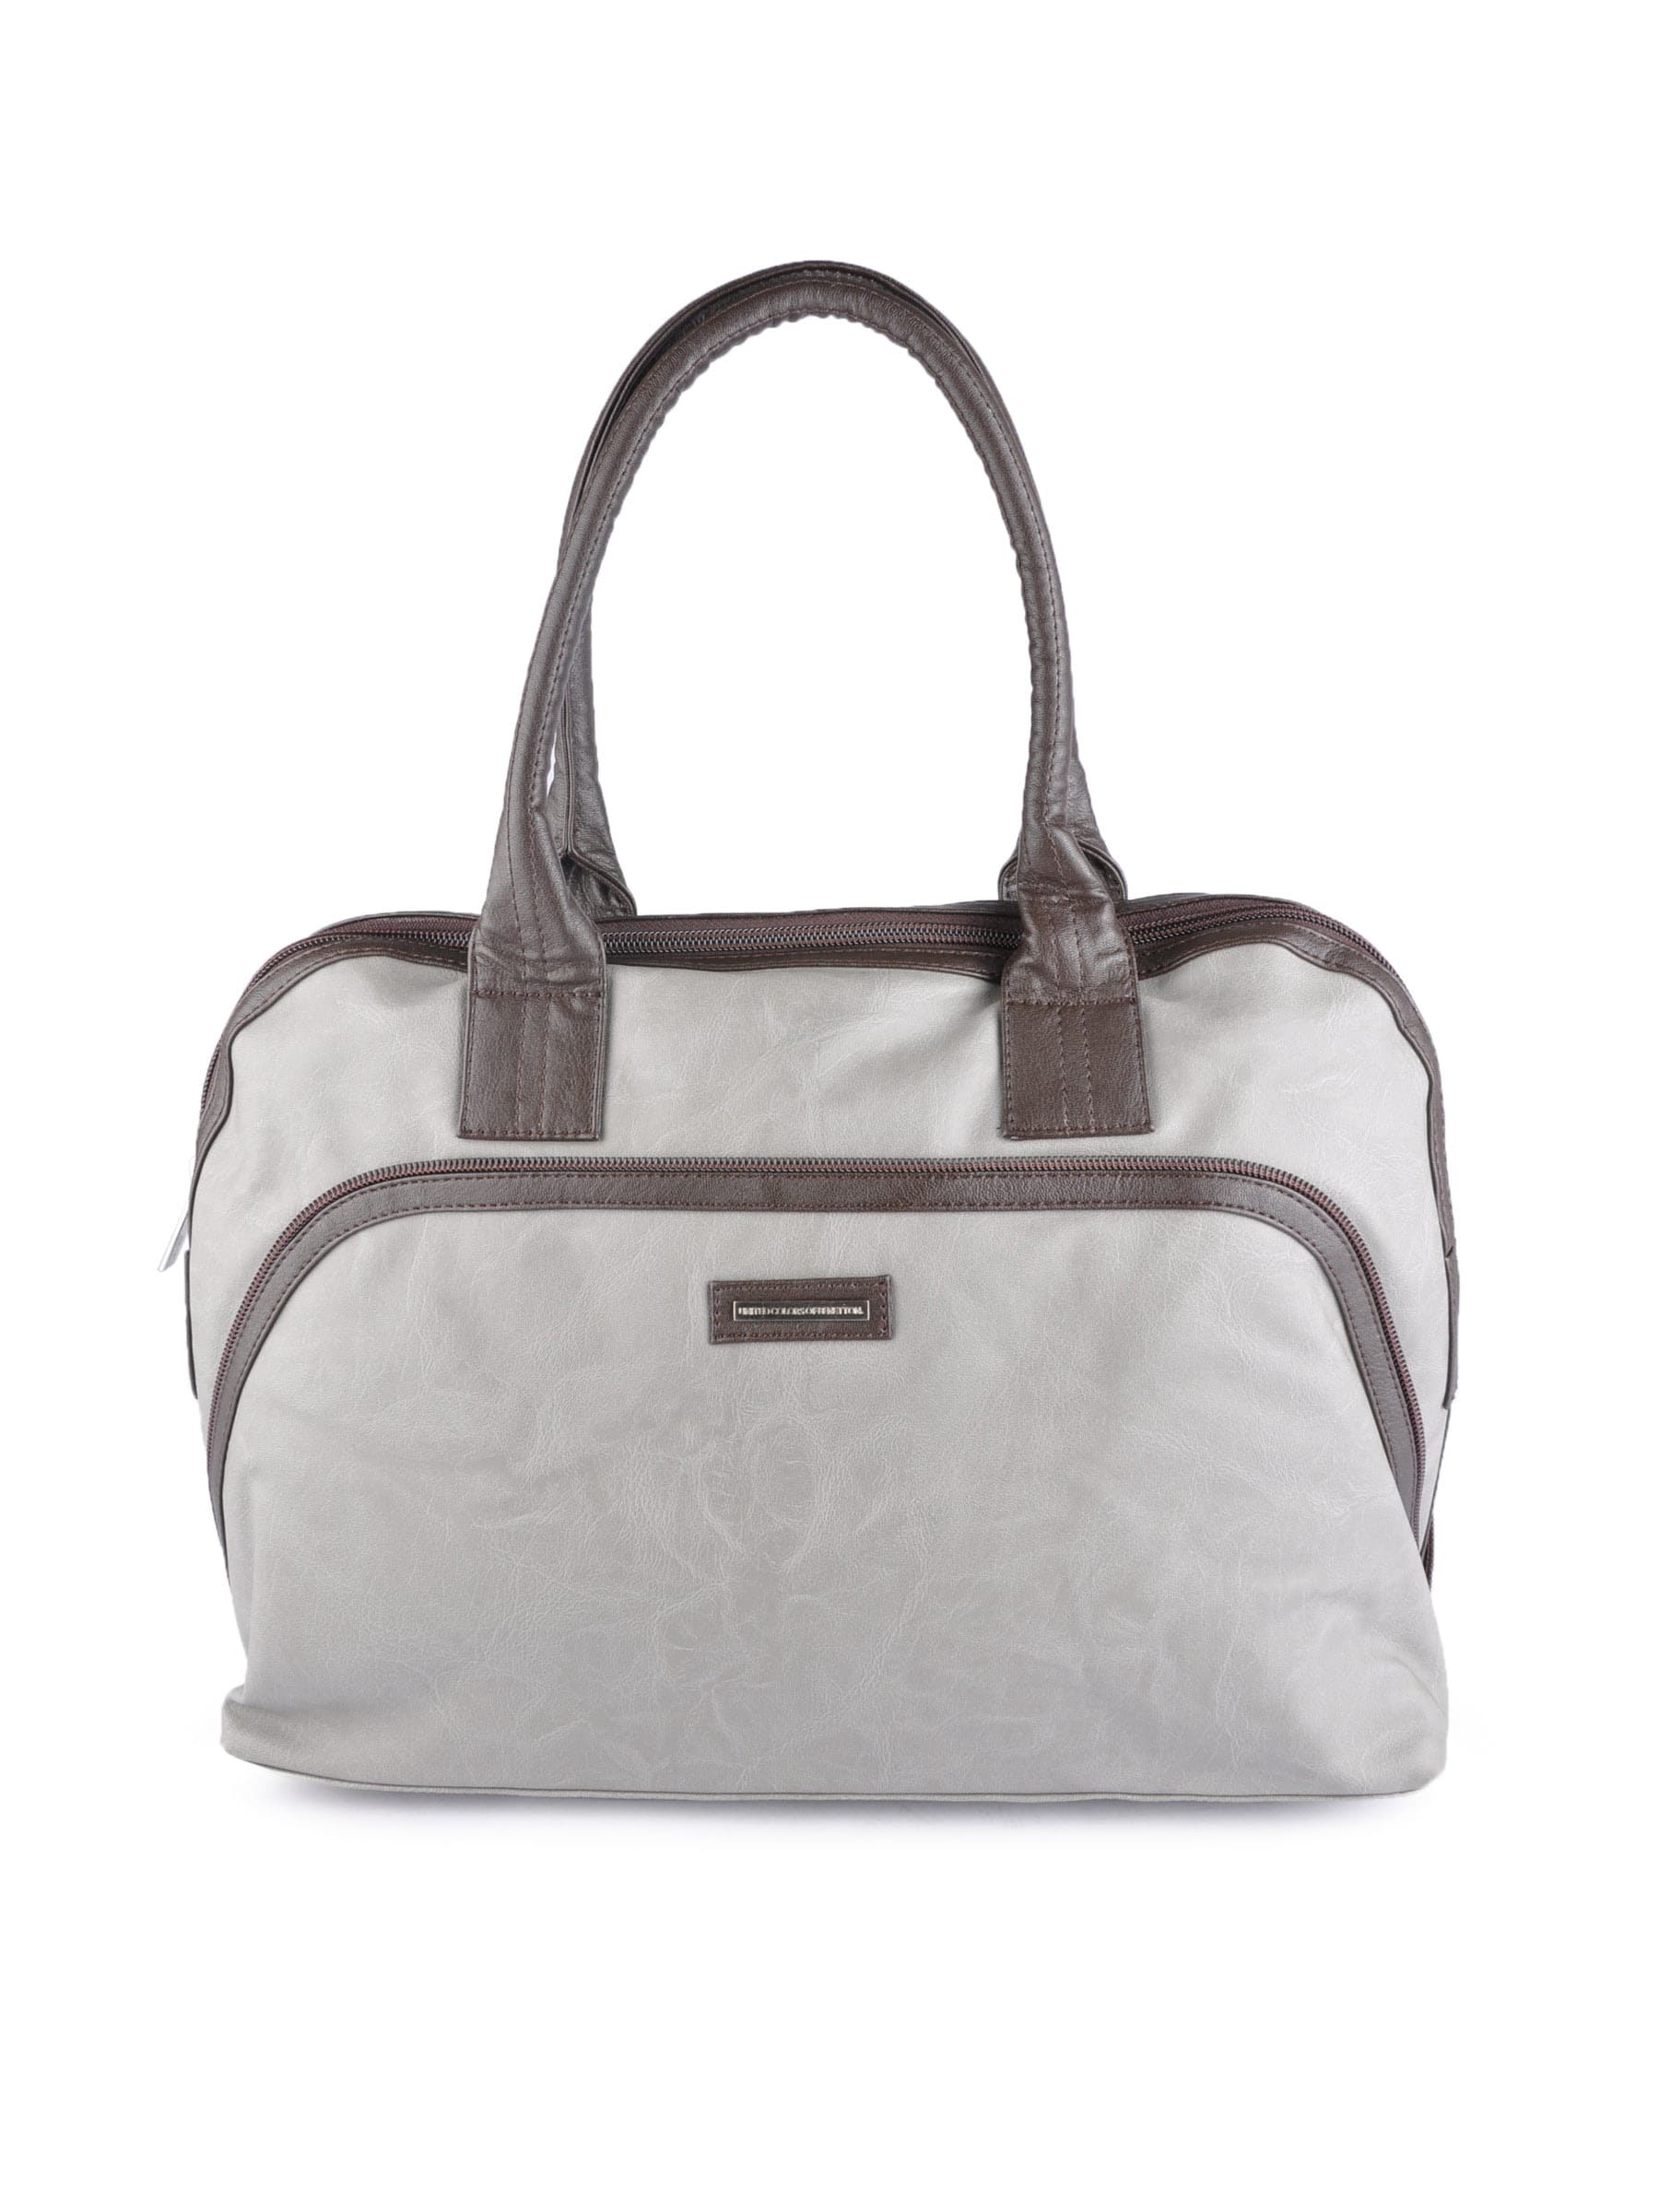 United Colors of Benetton Women Solid Grey Handbags